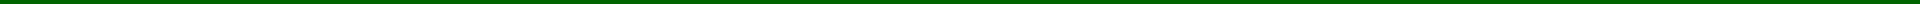 Green Line (4)